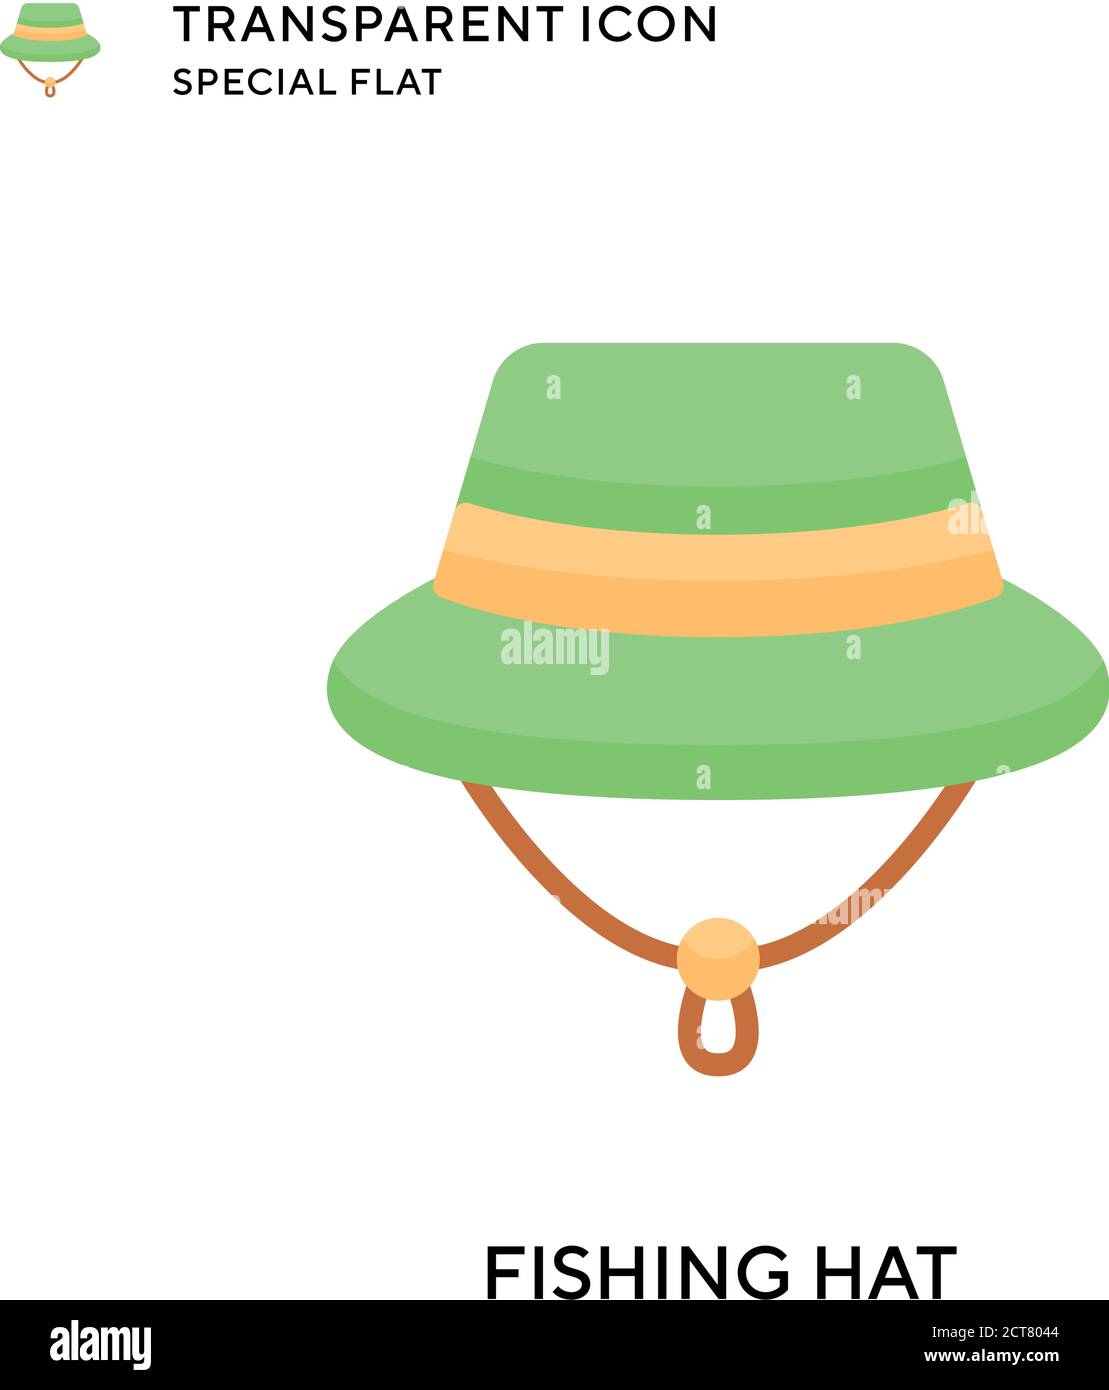 Fishing hat vector icon. Flat style illustration. EPS 10 vector